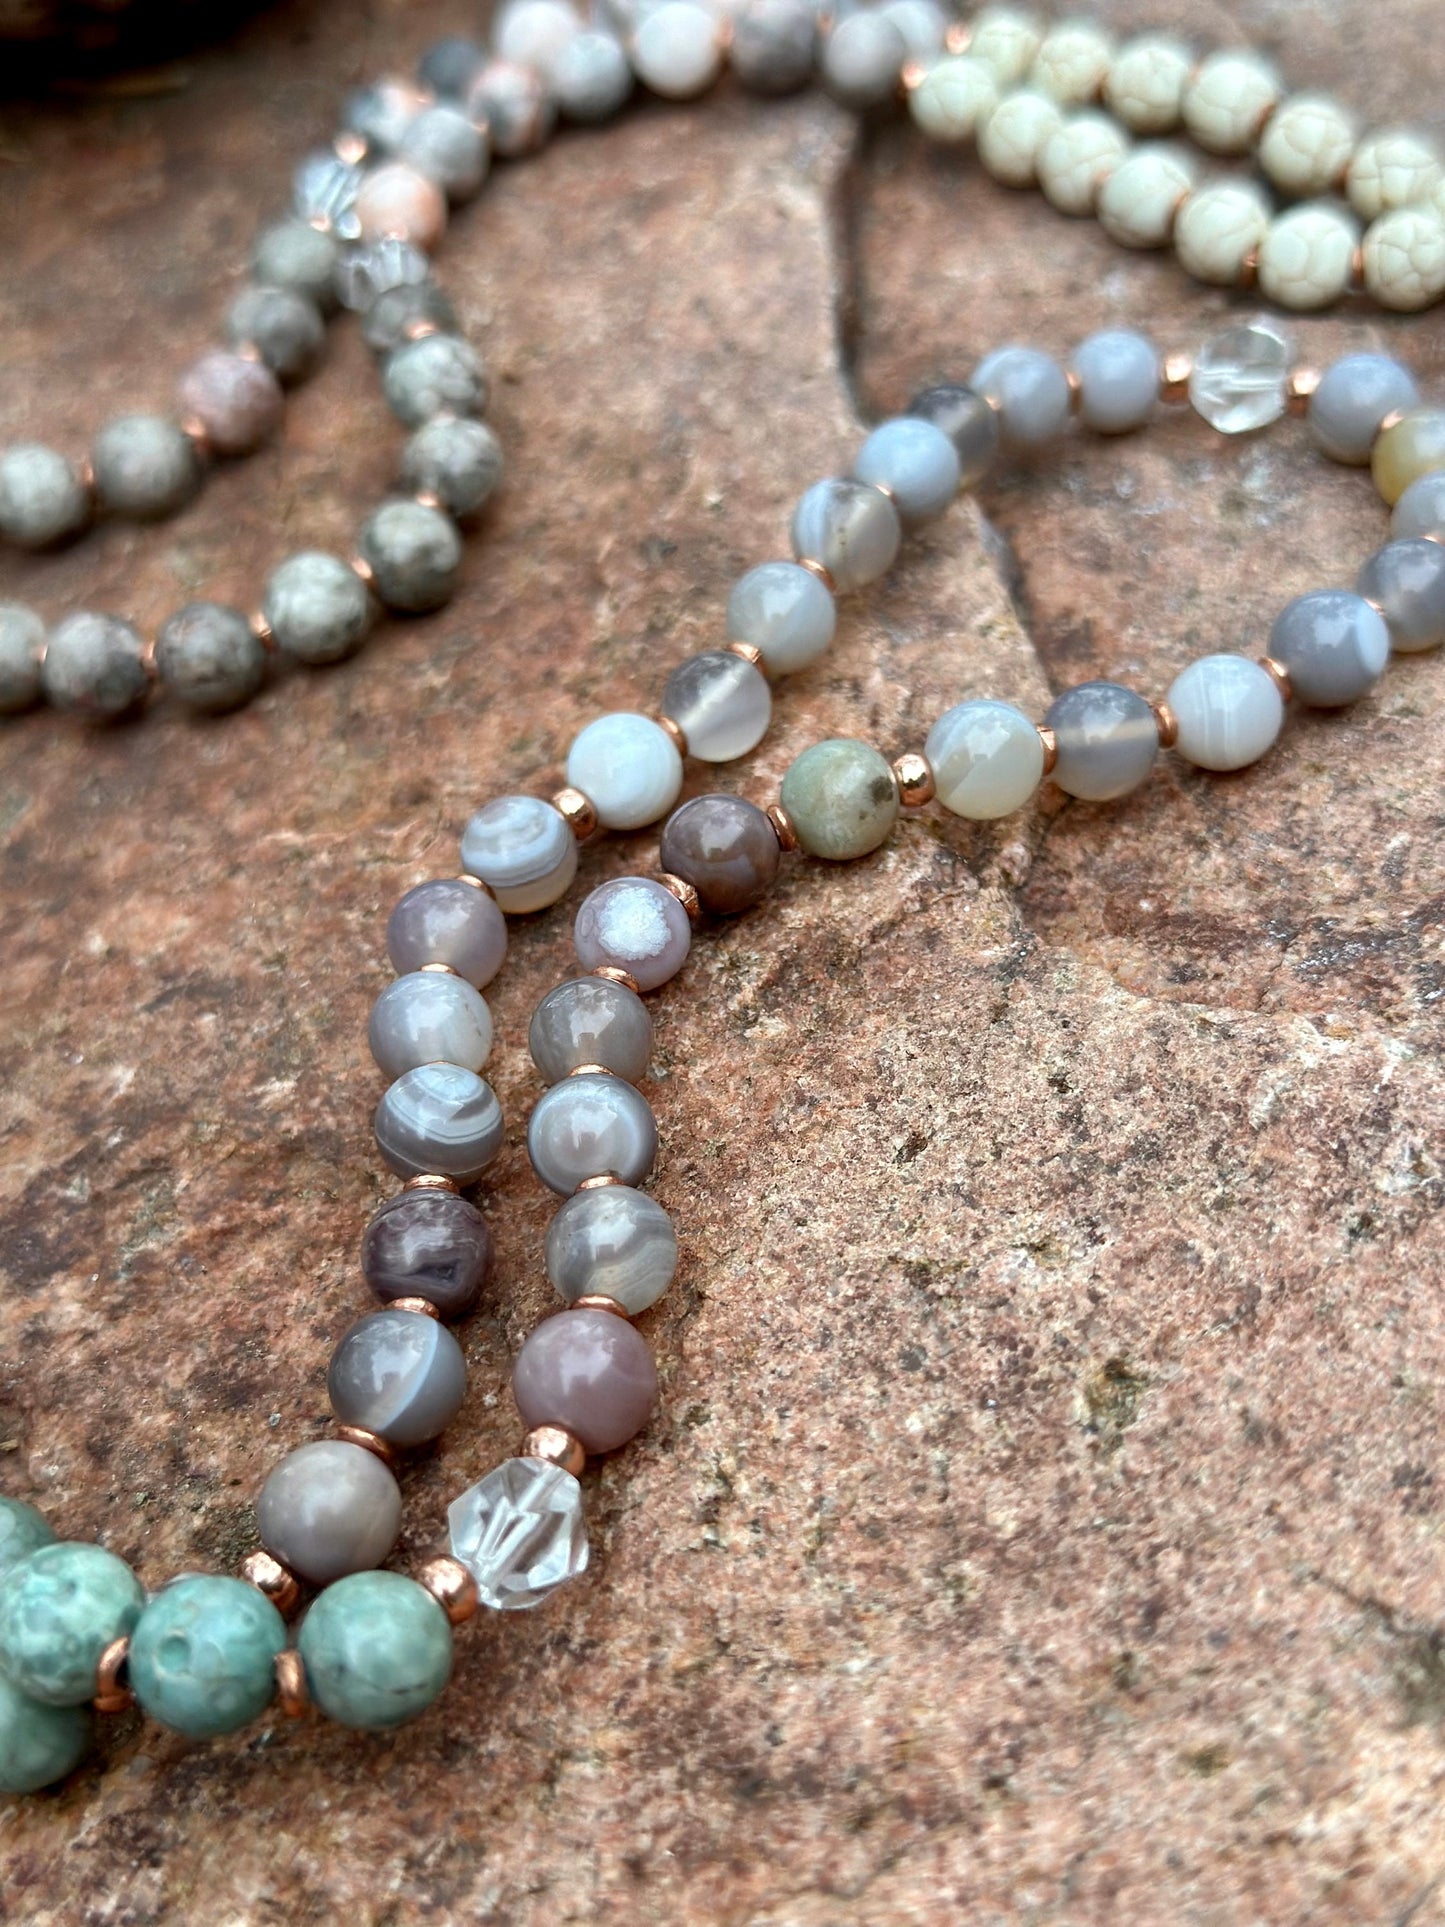 108 bead gemstone mala rare natural healing stone necklace wrapped bracelet jewelry gift for her meditation yoga practice mala prayer bangle